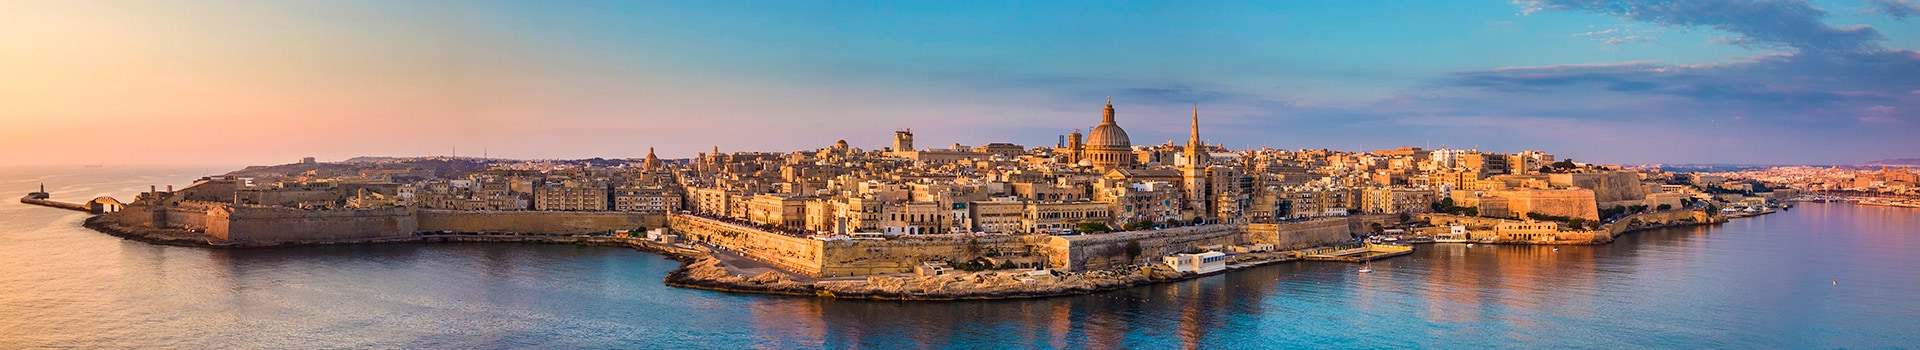 Venezia - Malta